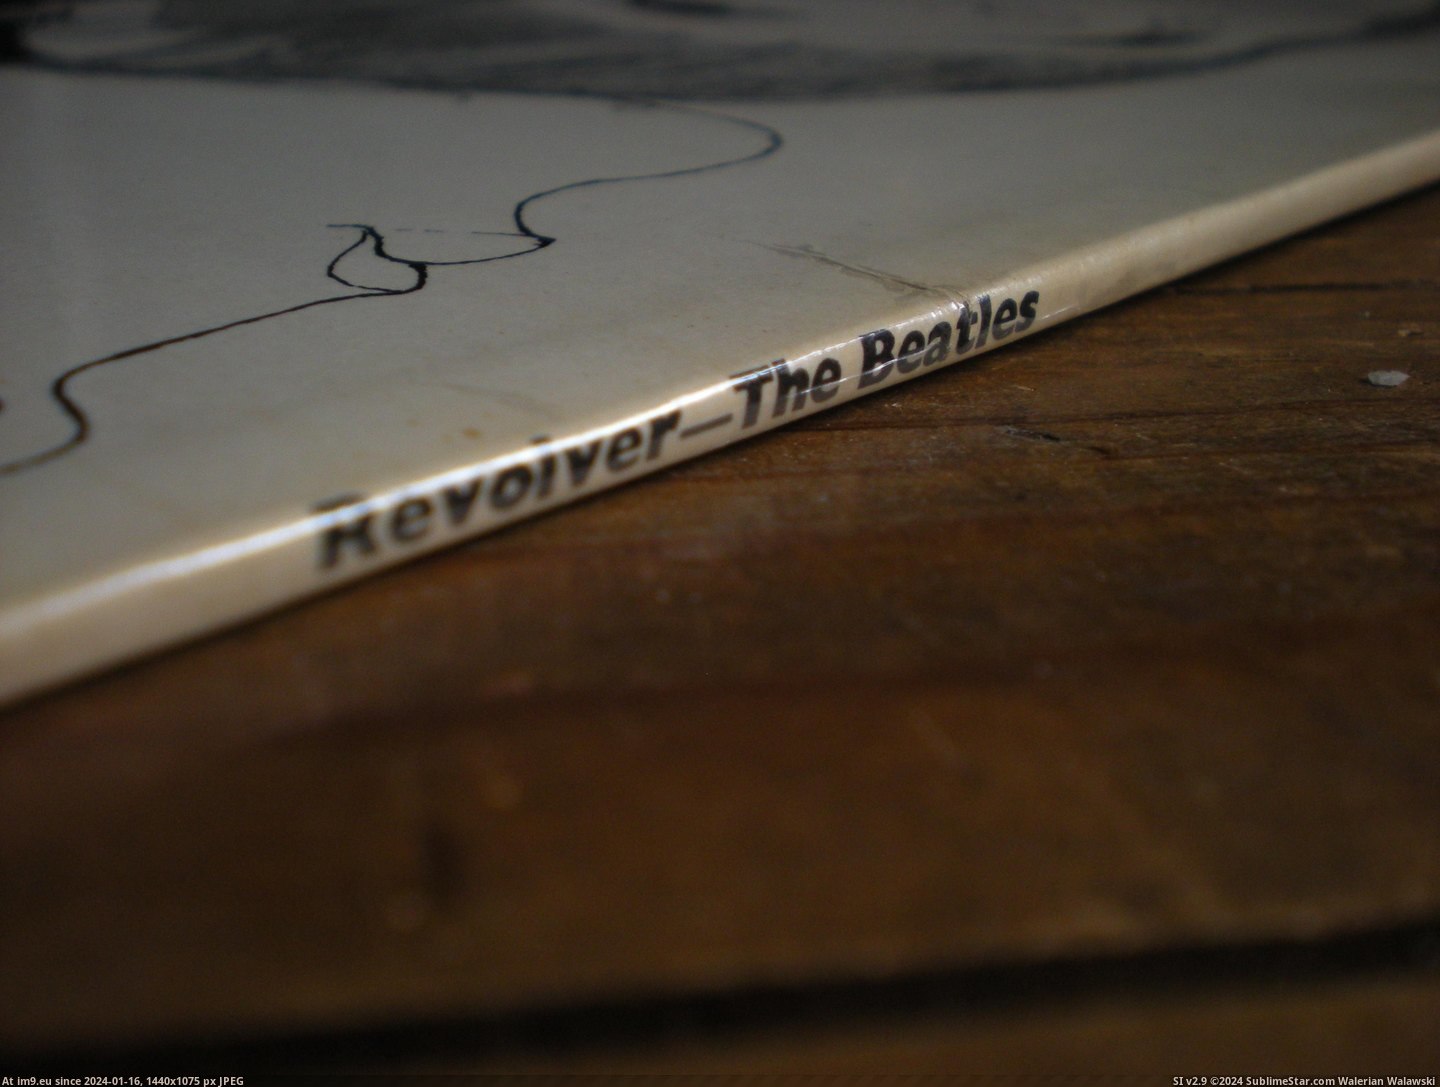  #Revolver  Revolver 15-07-14 4 Pic. (Изображение из альбом new 1))